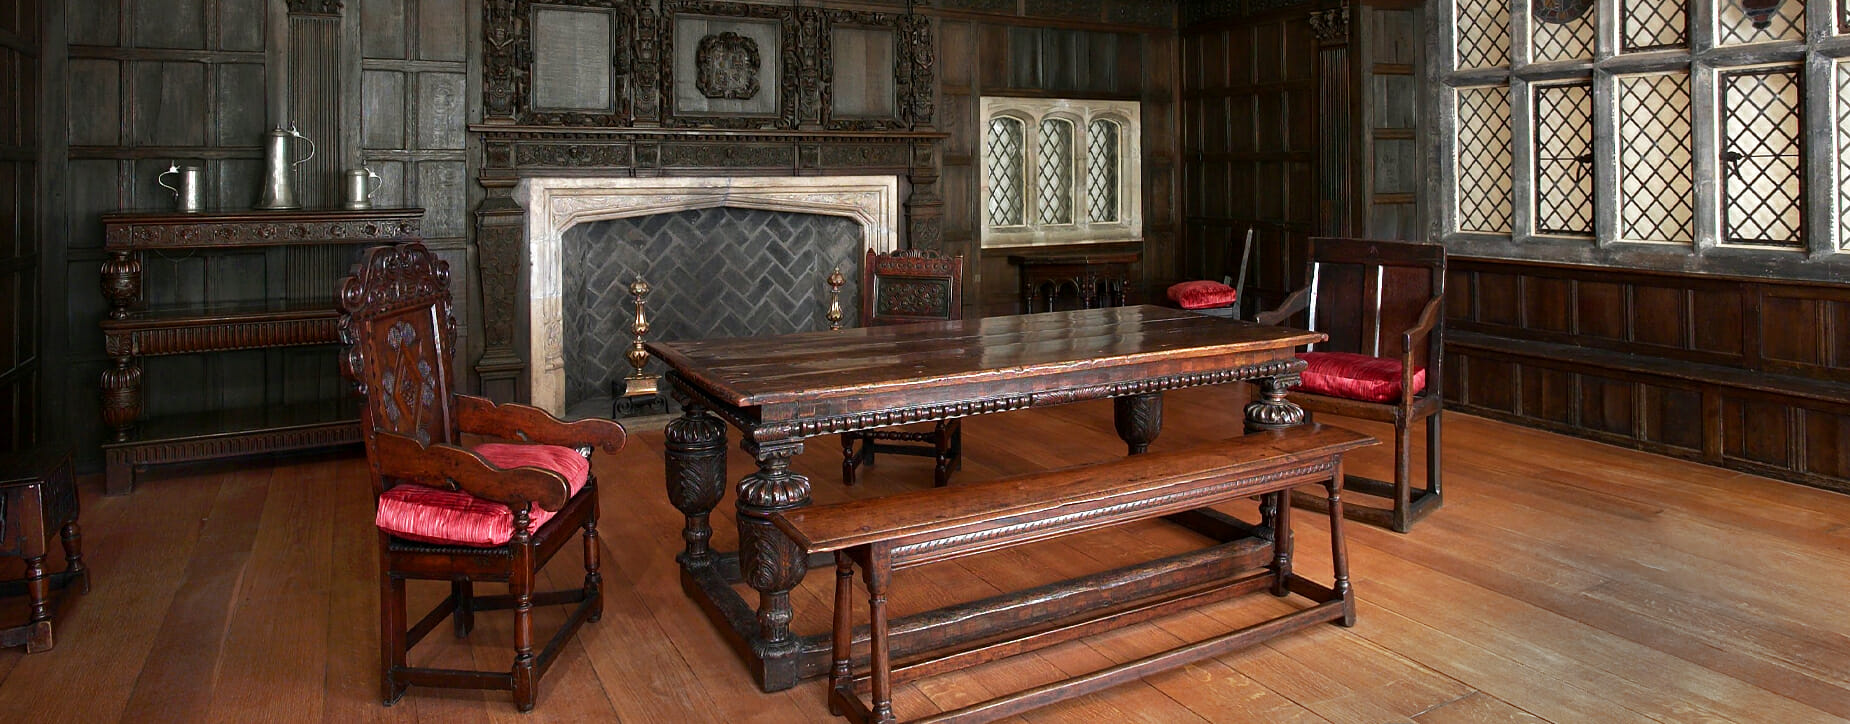 Tudor Room Furniture